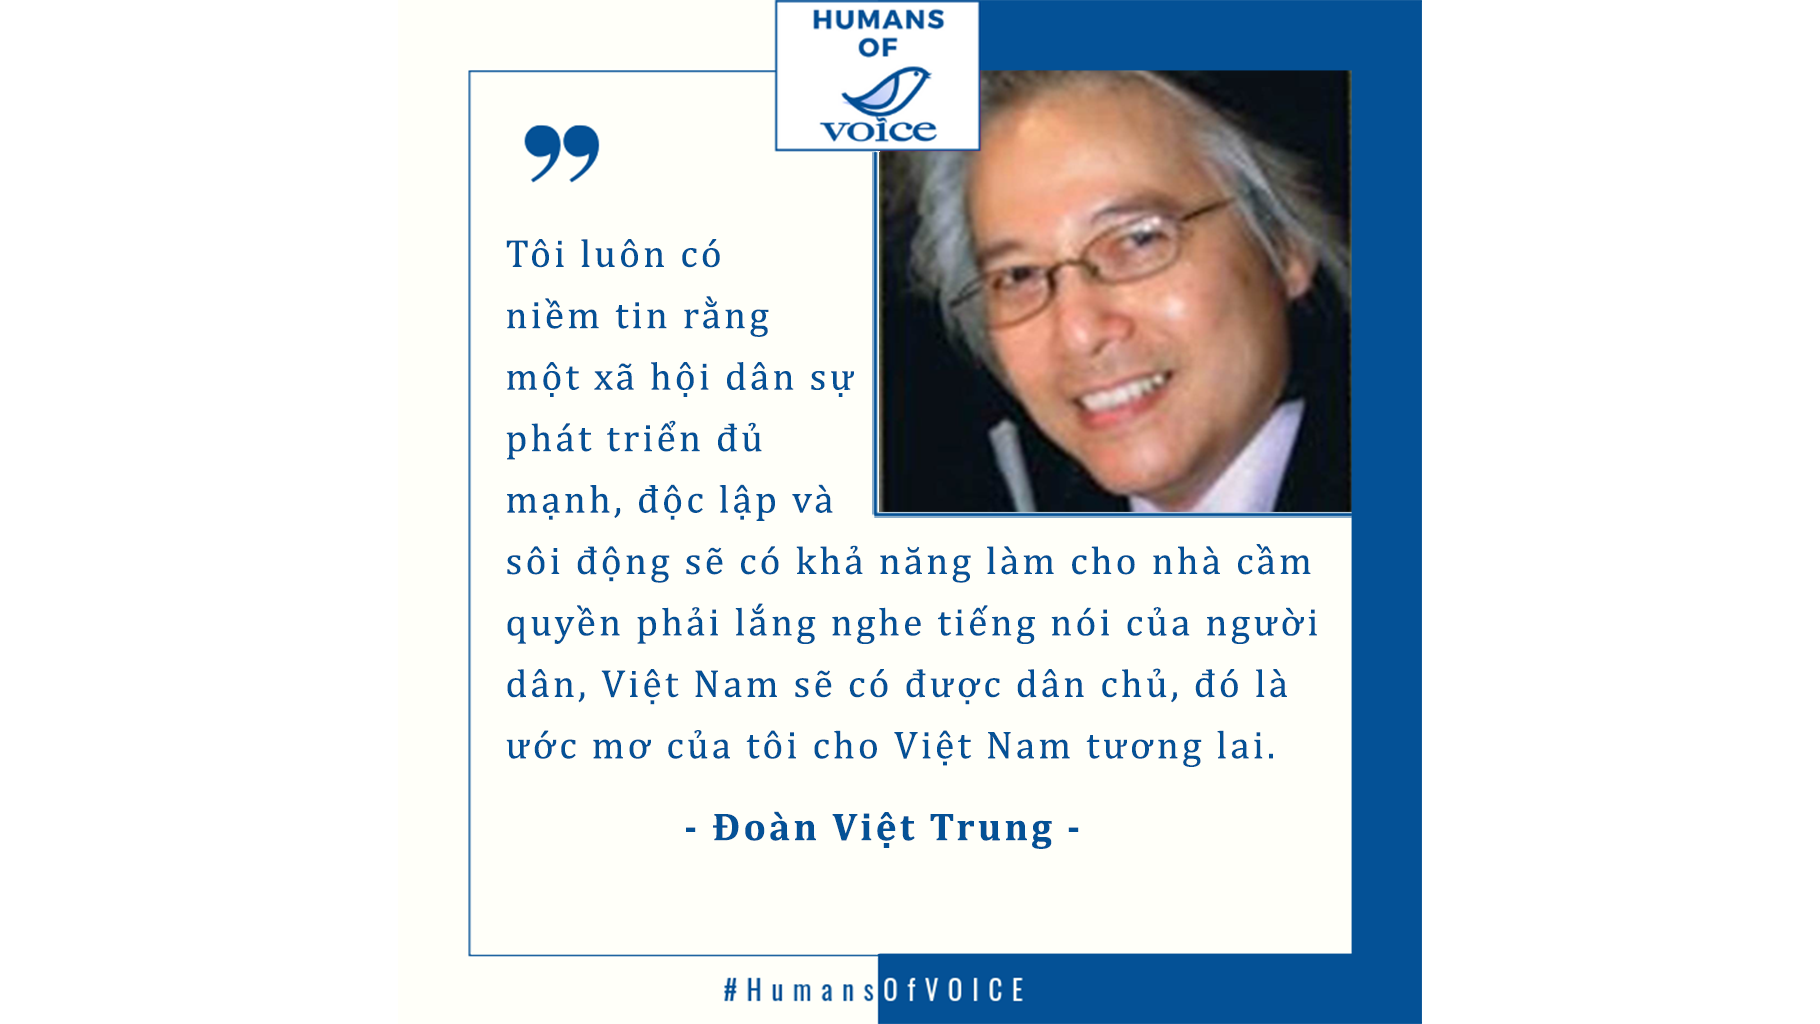 Humans of VOICE: Doan Viet Trung